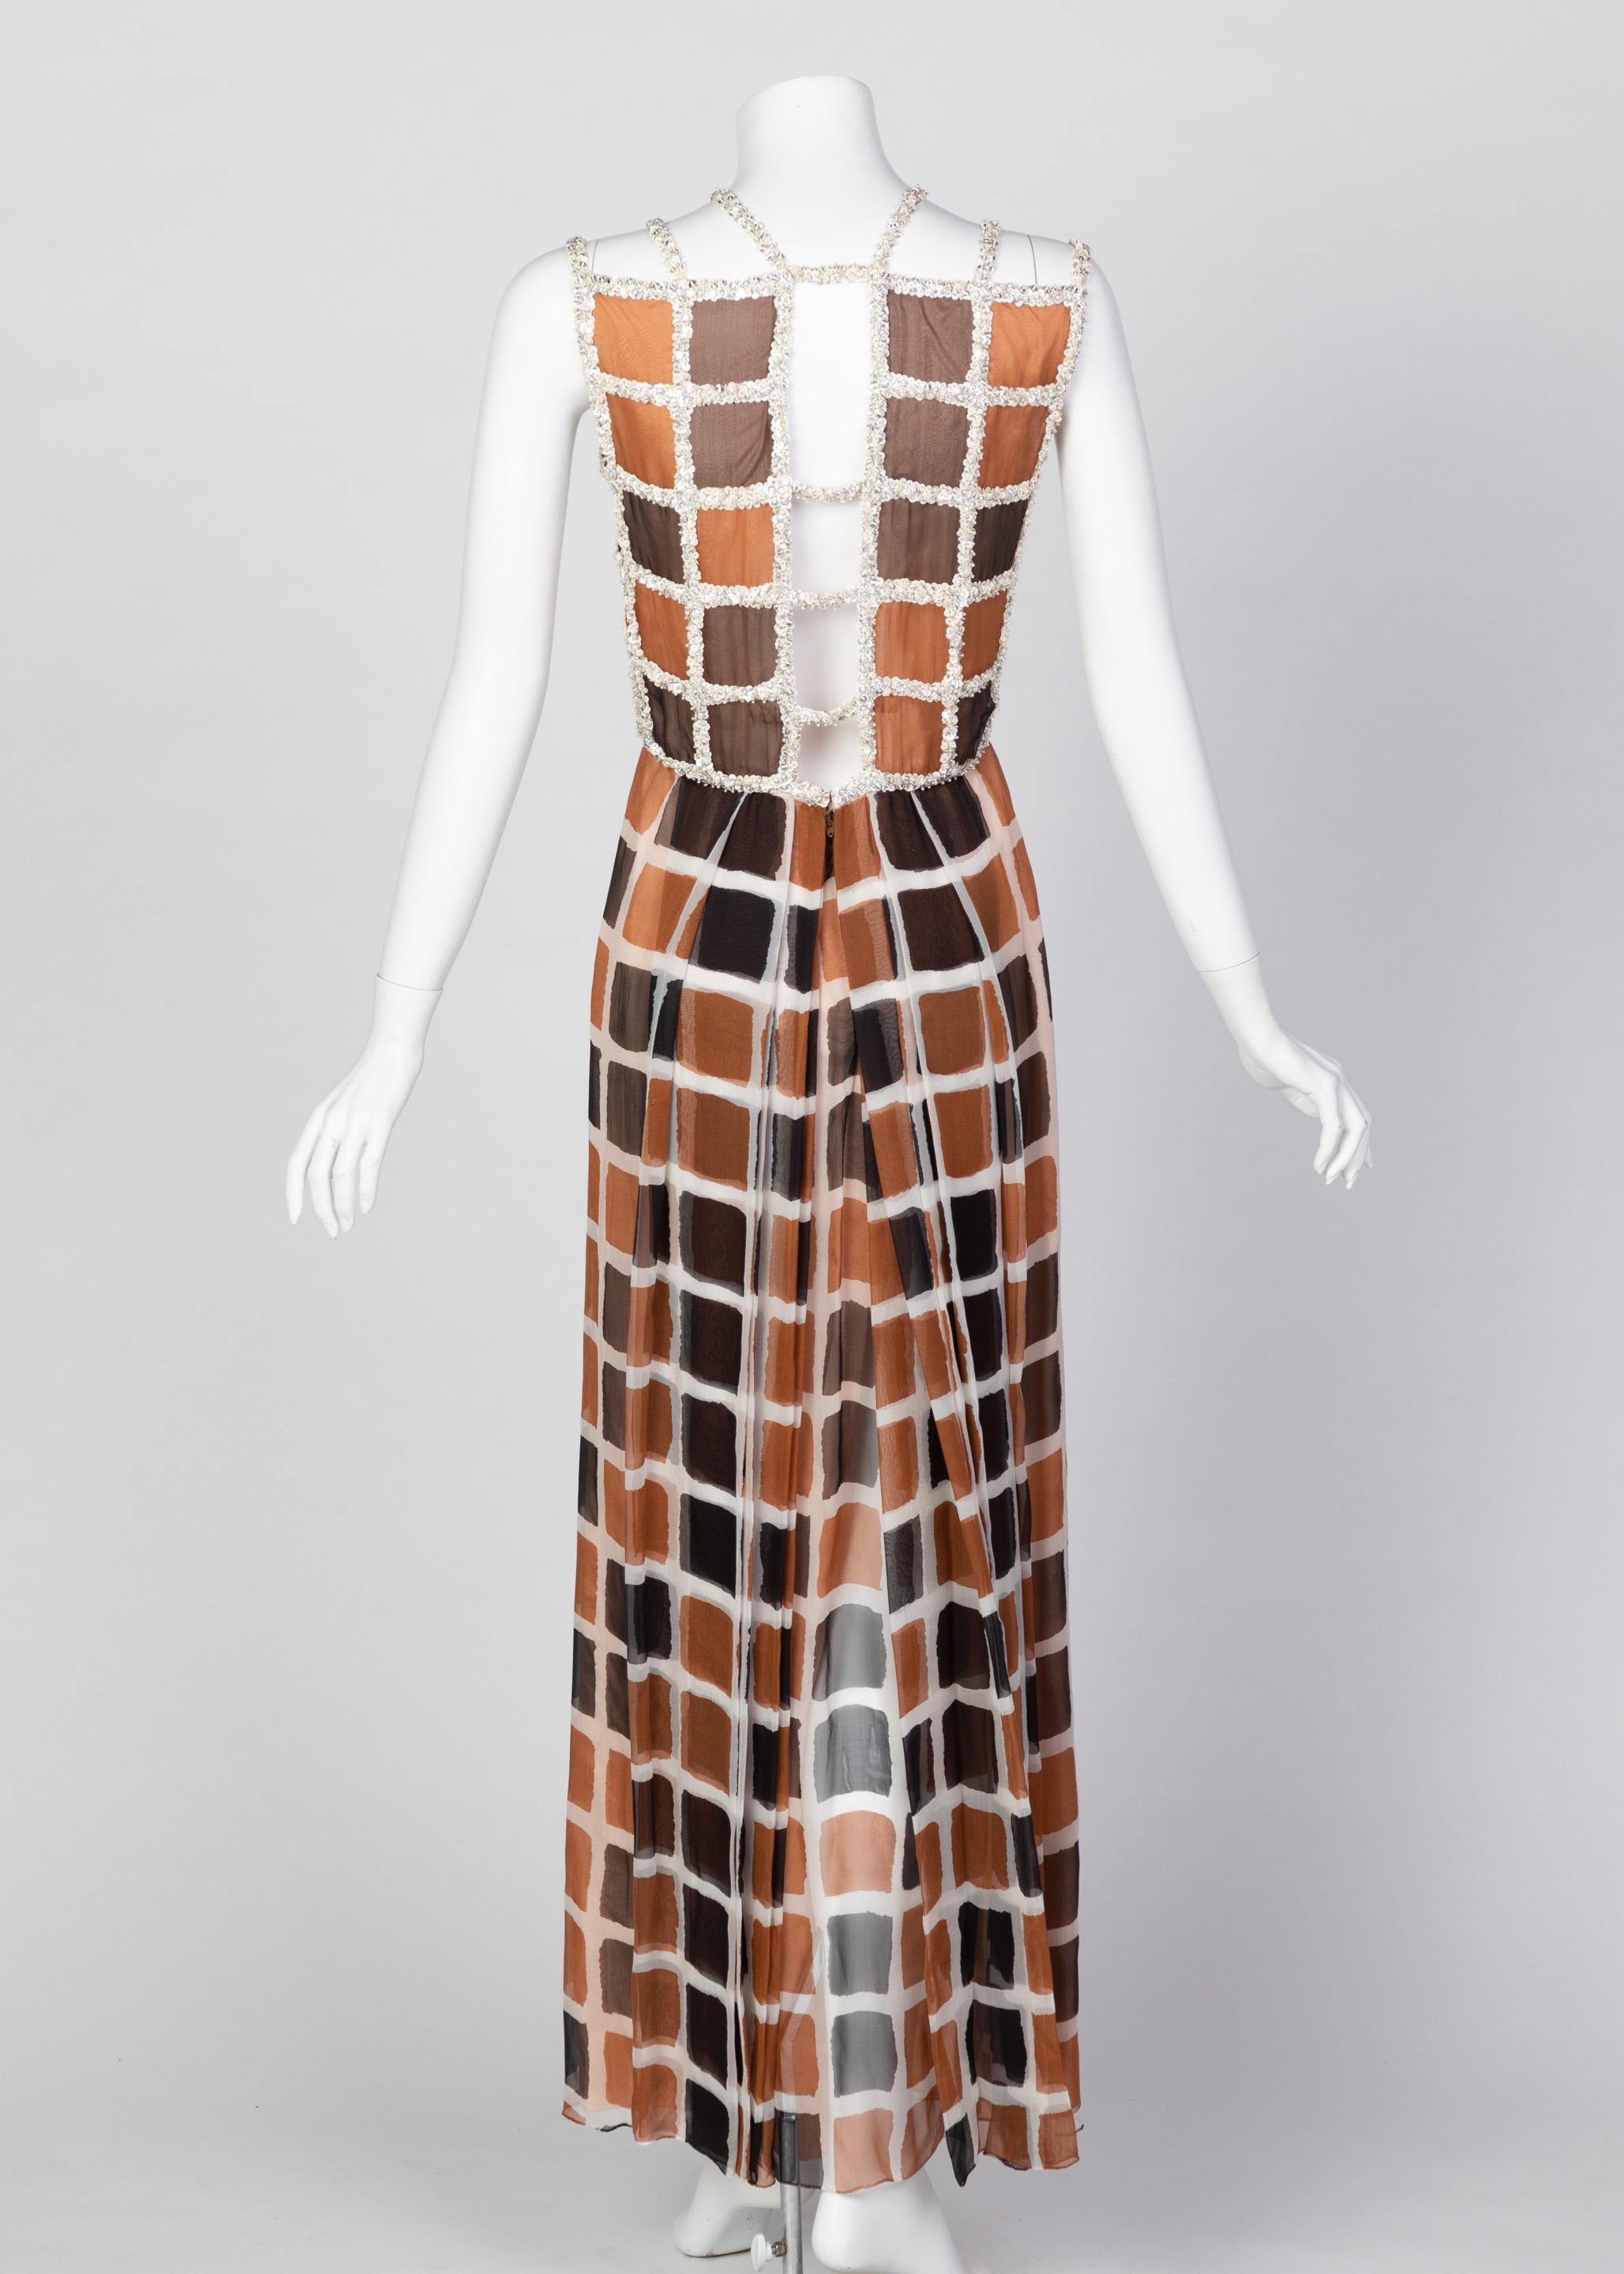 James Galanos Couture Chiffon Dress with Sequins Lattice Straps, 1980s 4